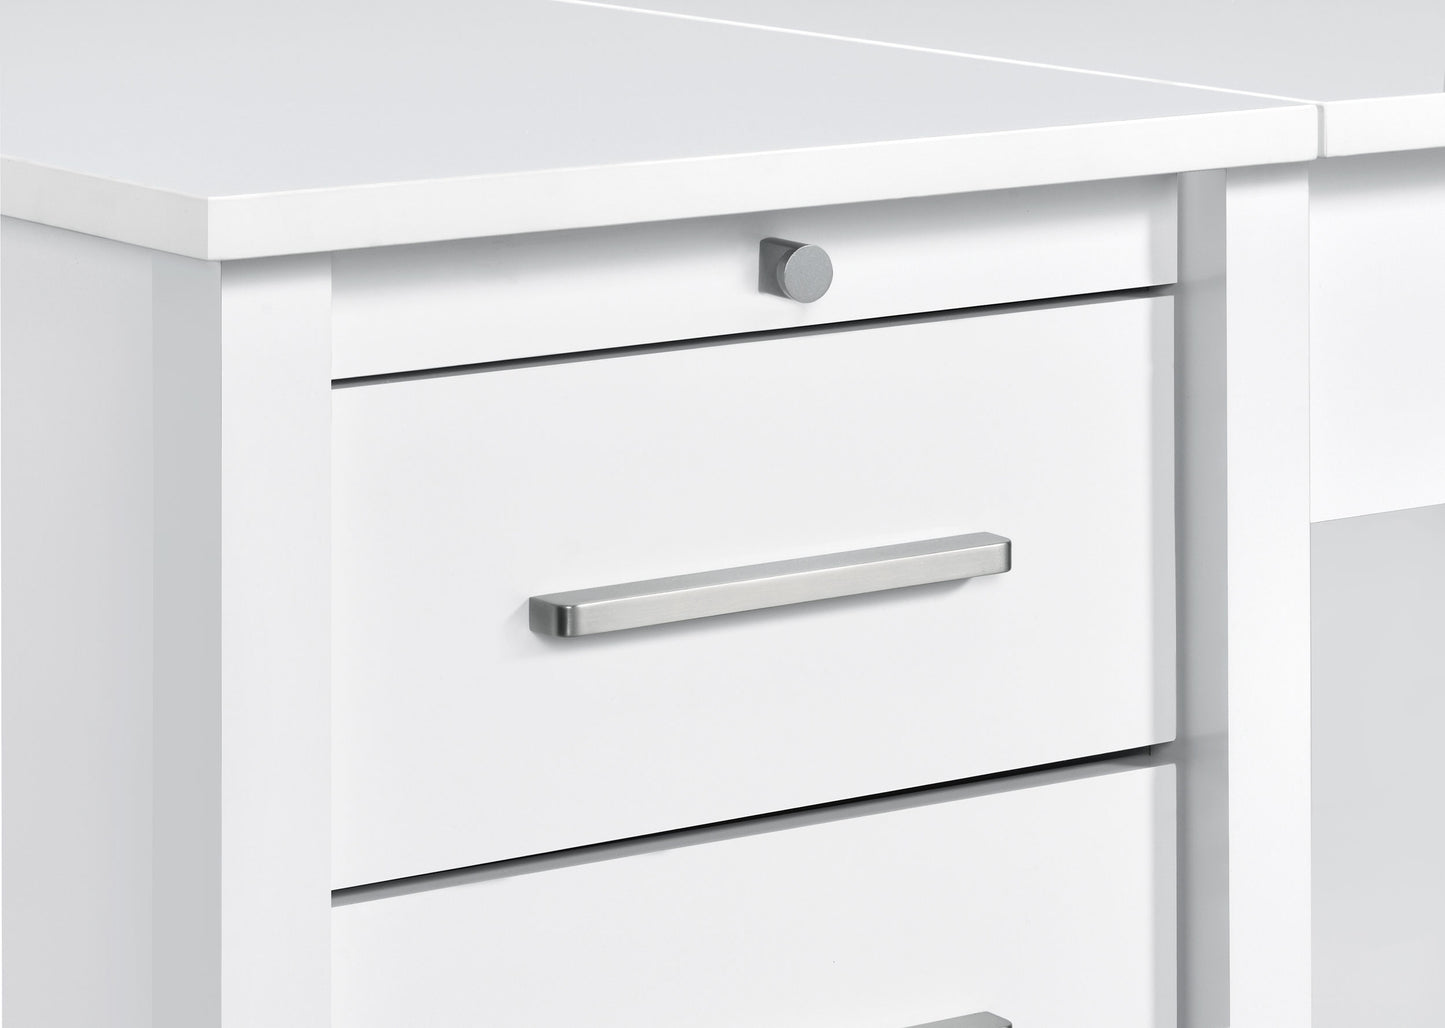 Dylan 4-drawer Lift Top Office Desk